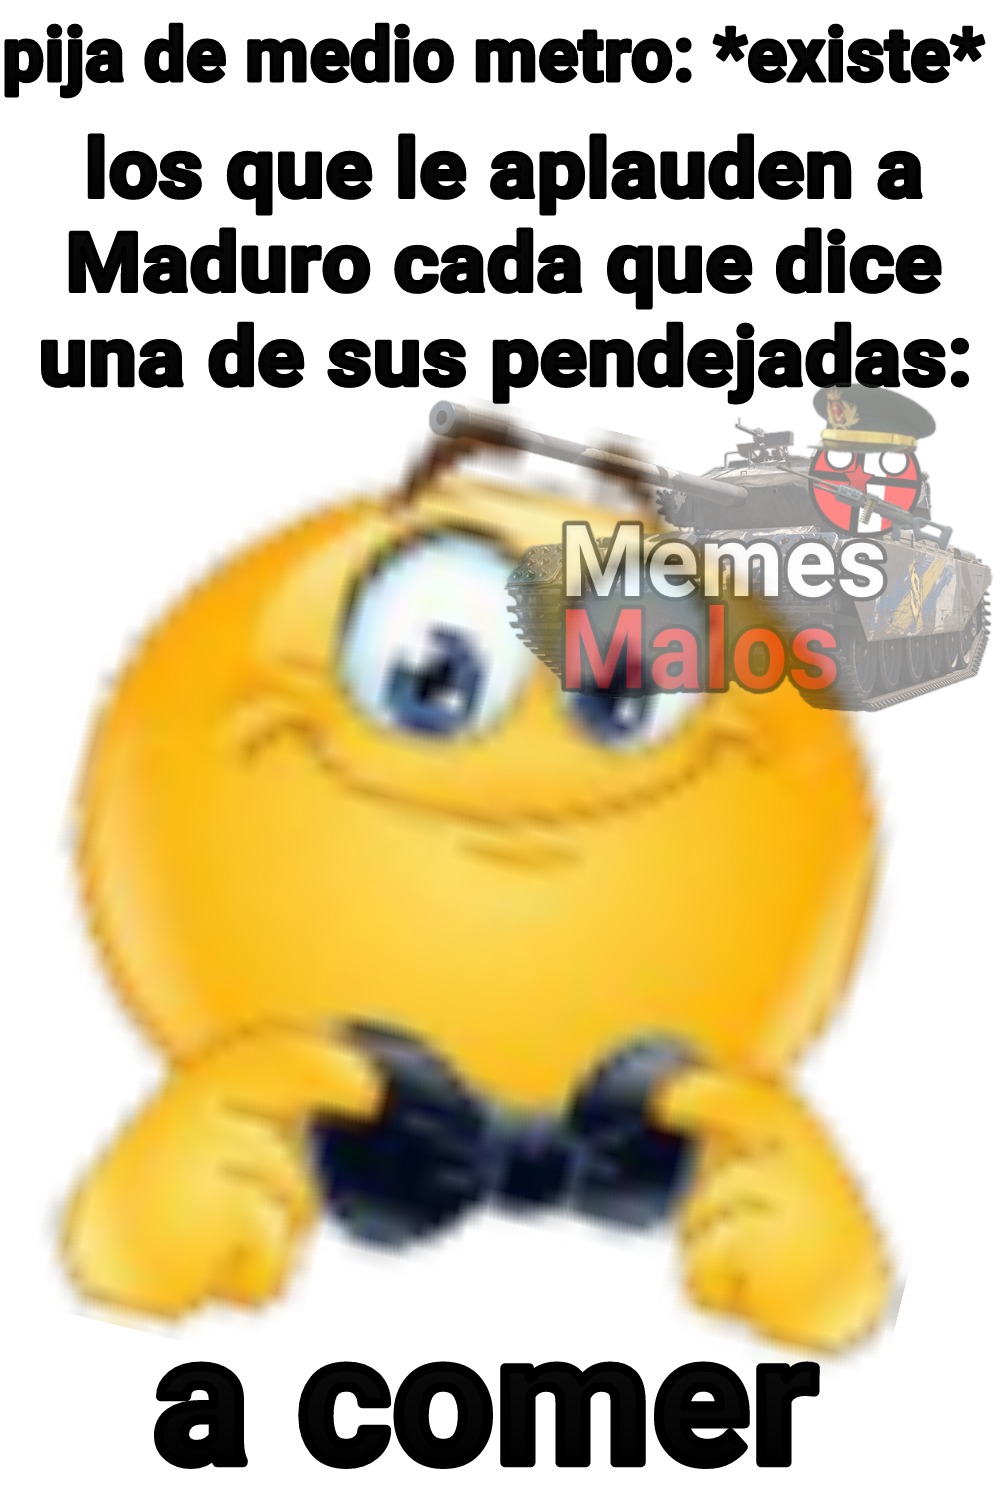 when chavistas cerebron't - meme